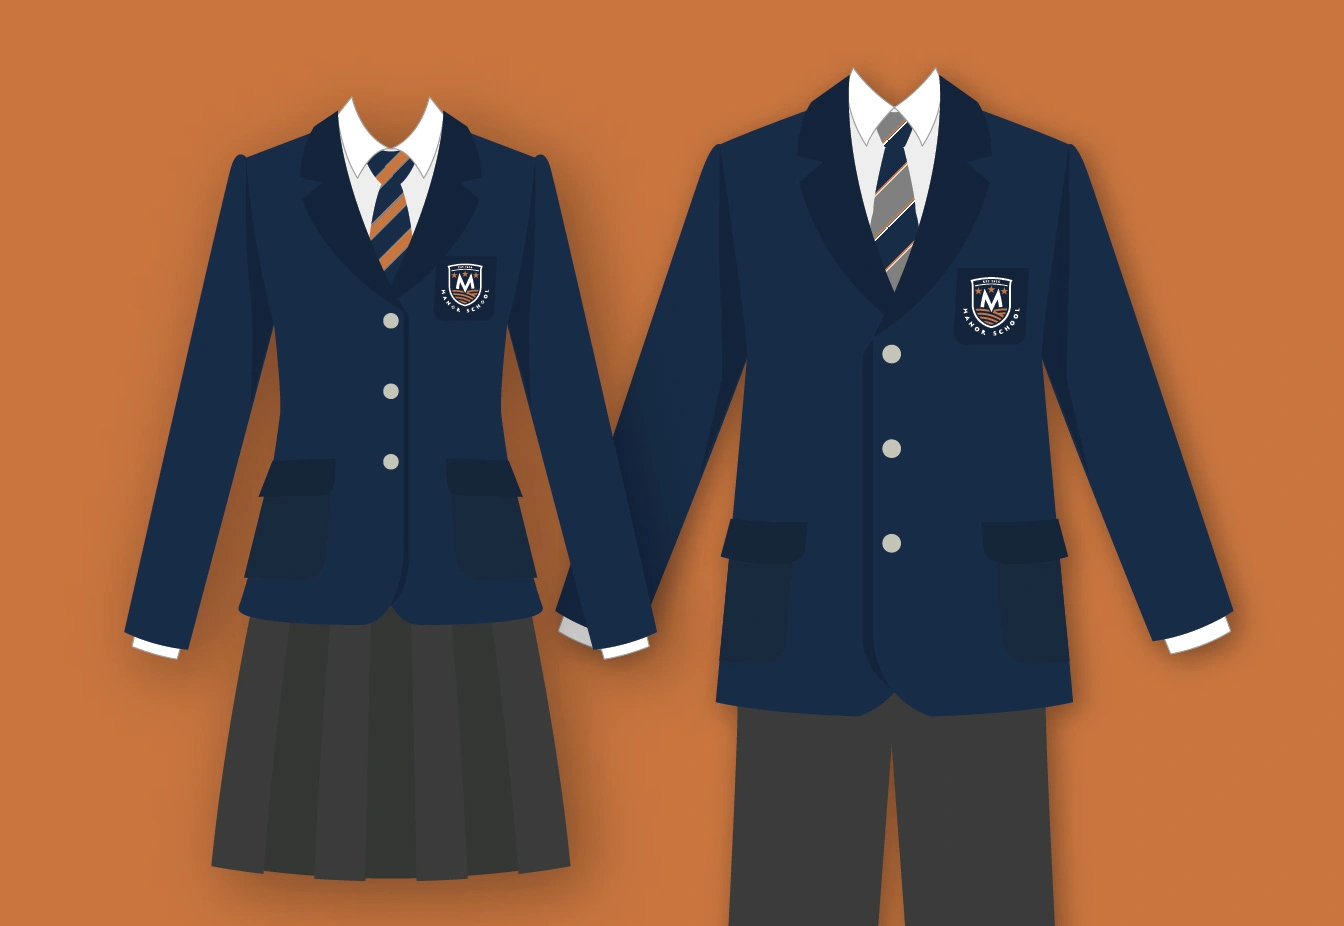 Image of two school blazers